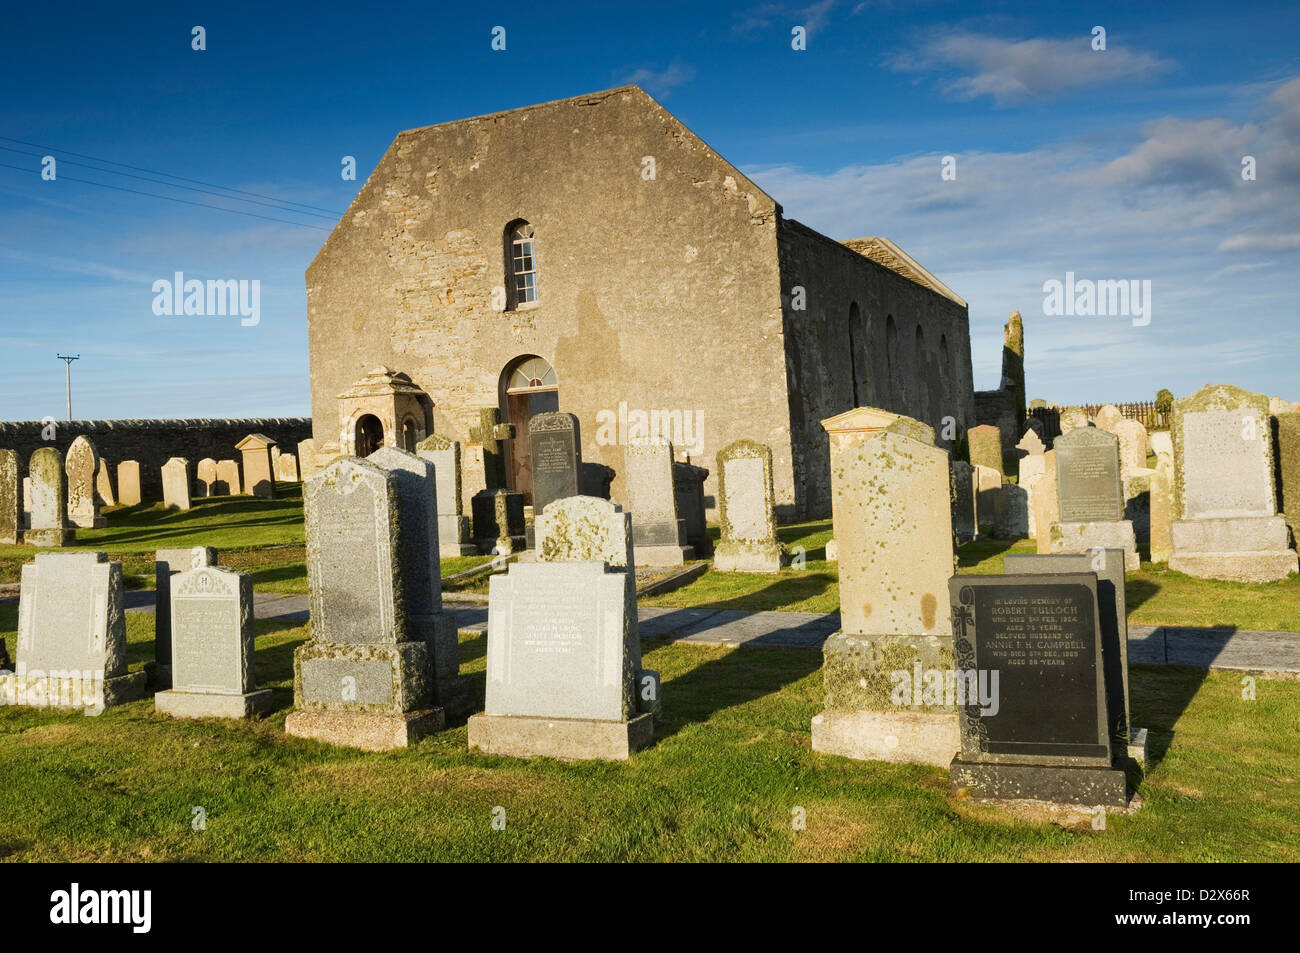 Churchyard on the island of Shapinsay, Orkney Islands, Scotland. Stock Photo